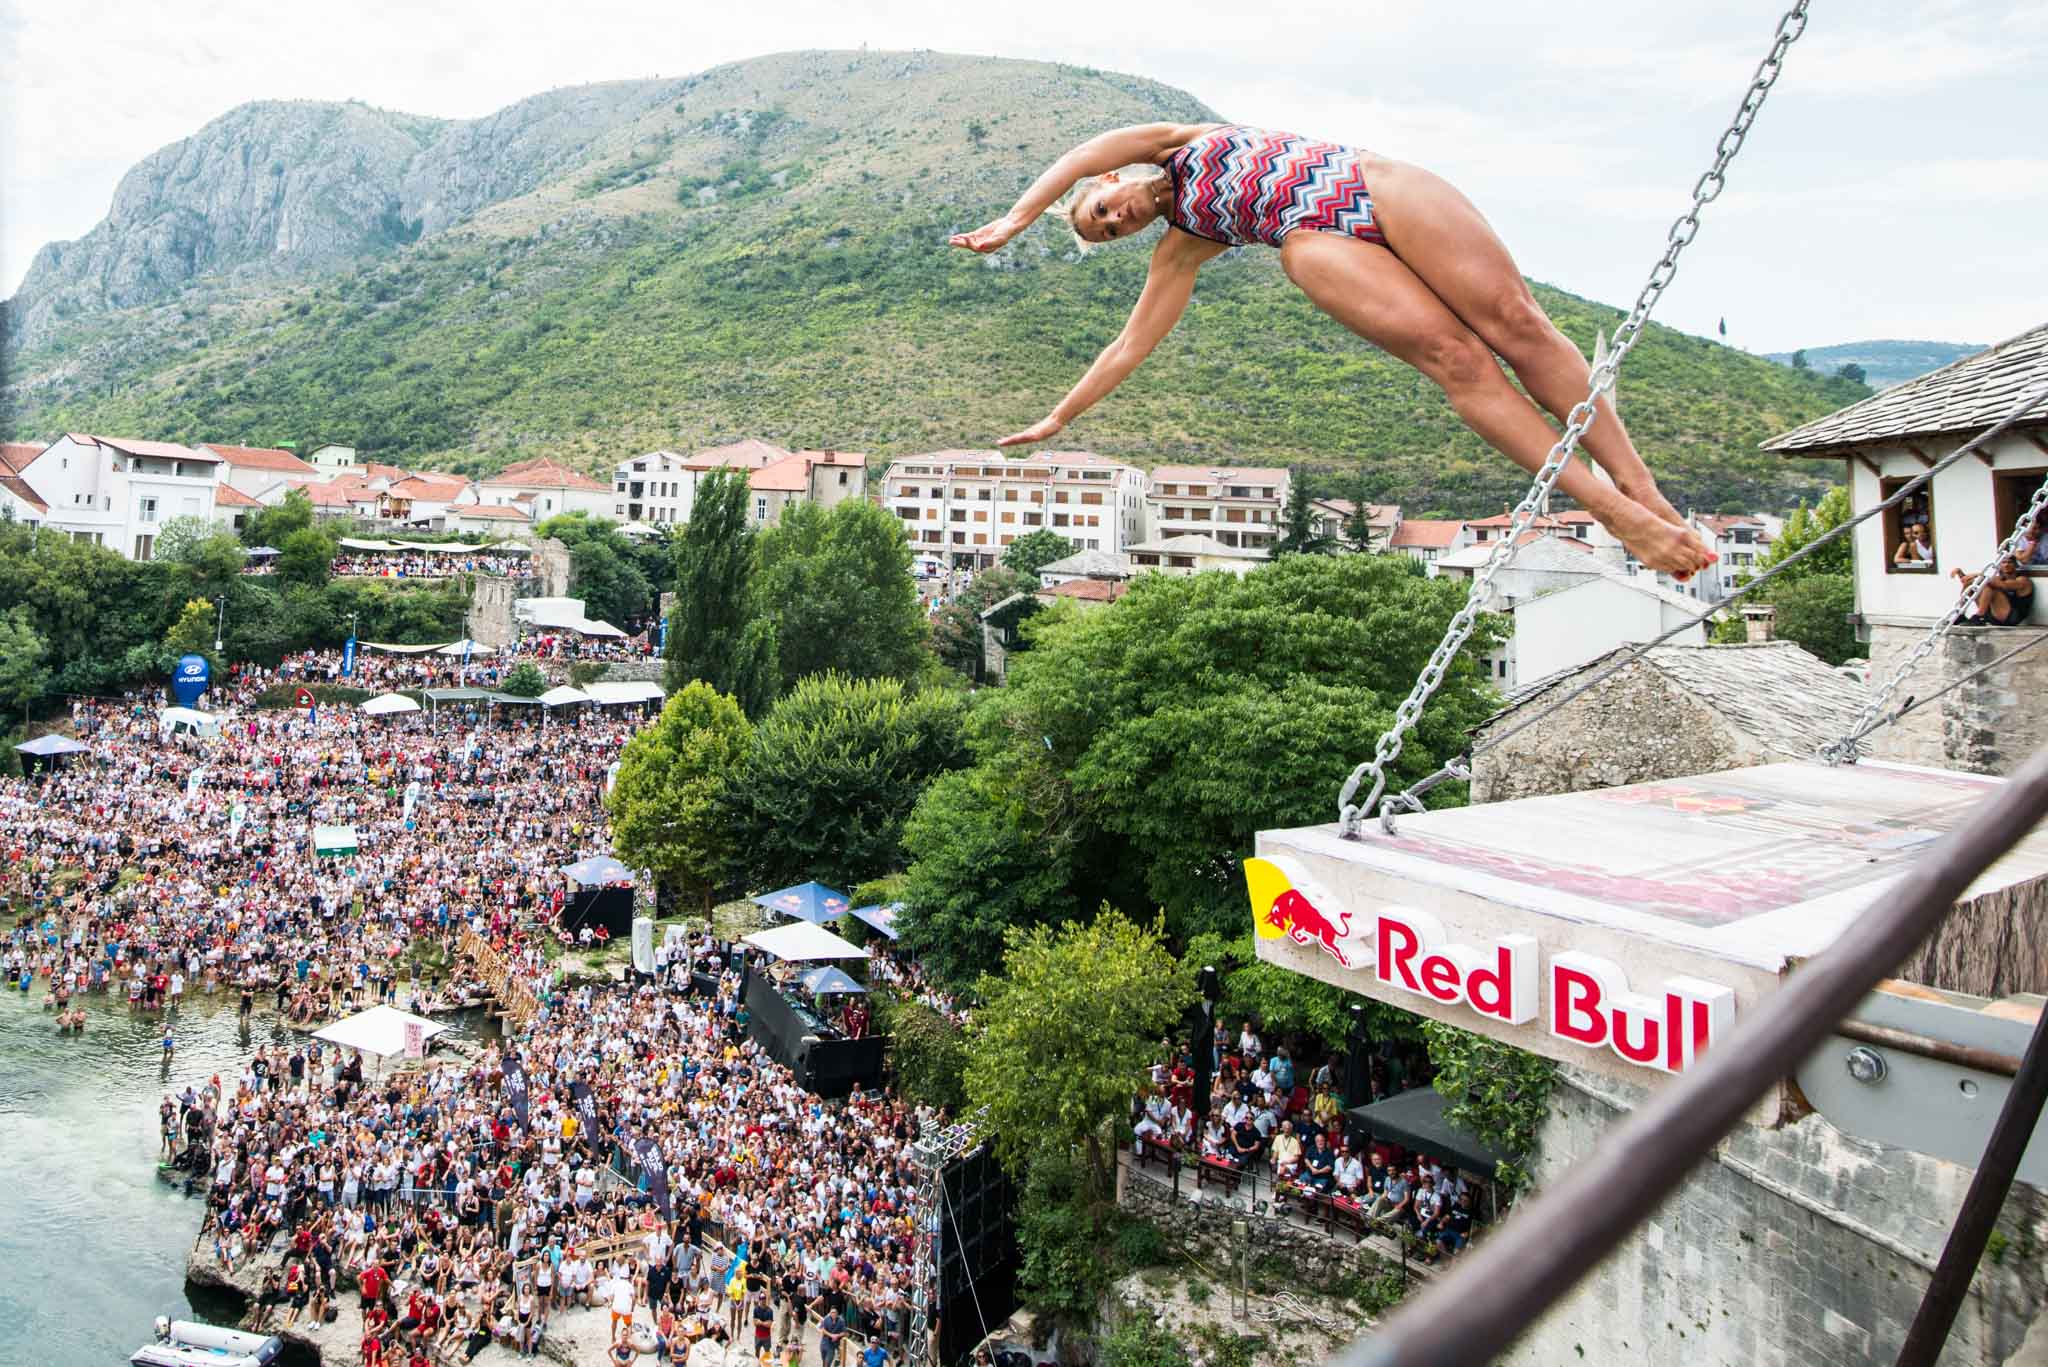 Finale u subotu / Danas prvi takmičarski skokovi na Red Bull Cliff Divingu u Mostaru